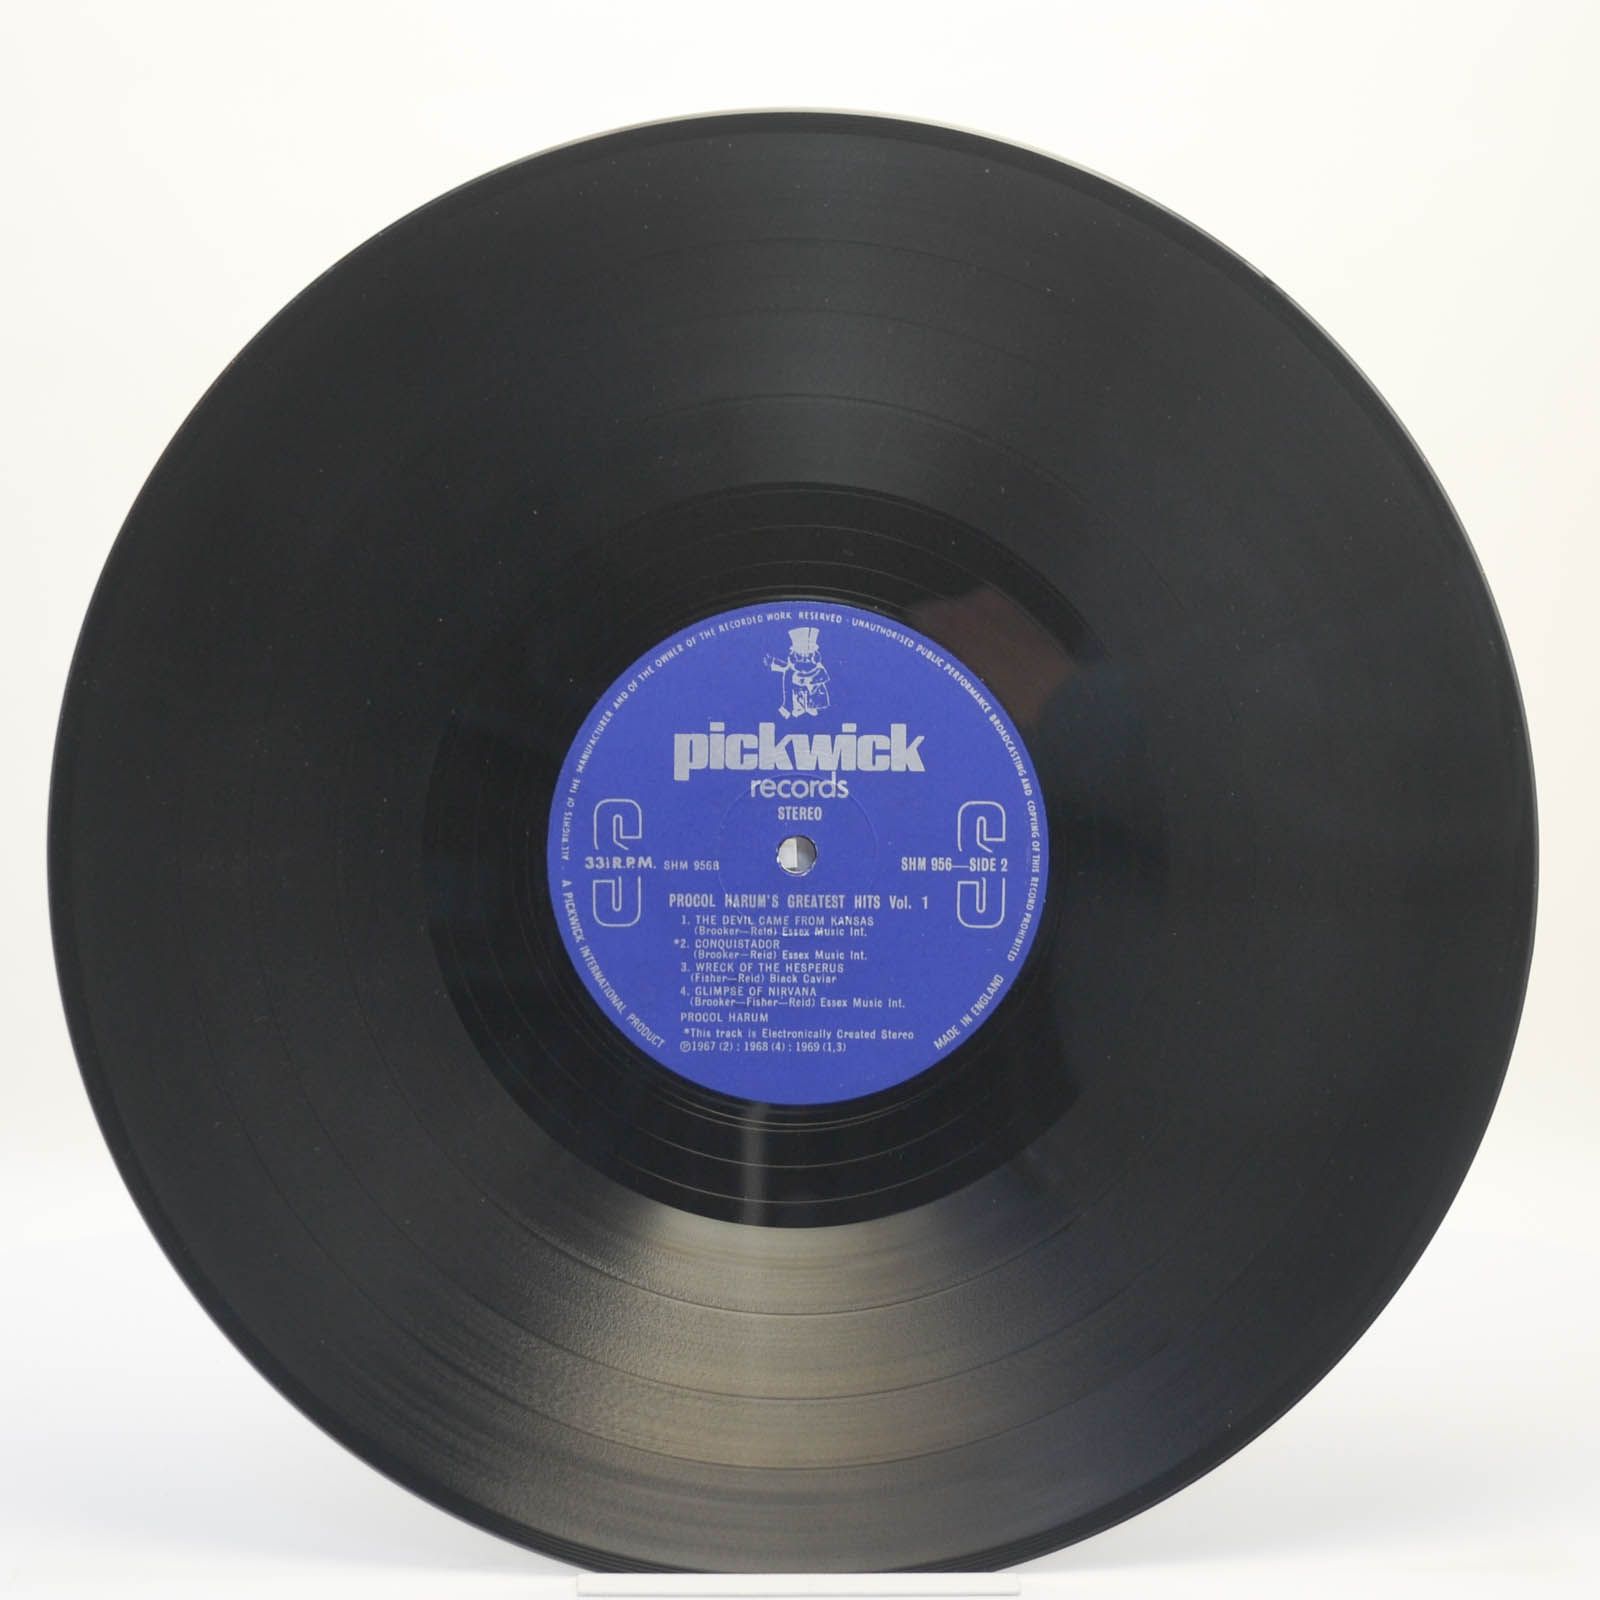 Procol Harum — Greatest Hits Vol. 1 (UK), 1978